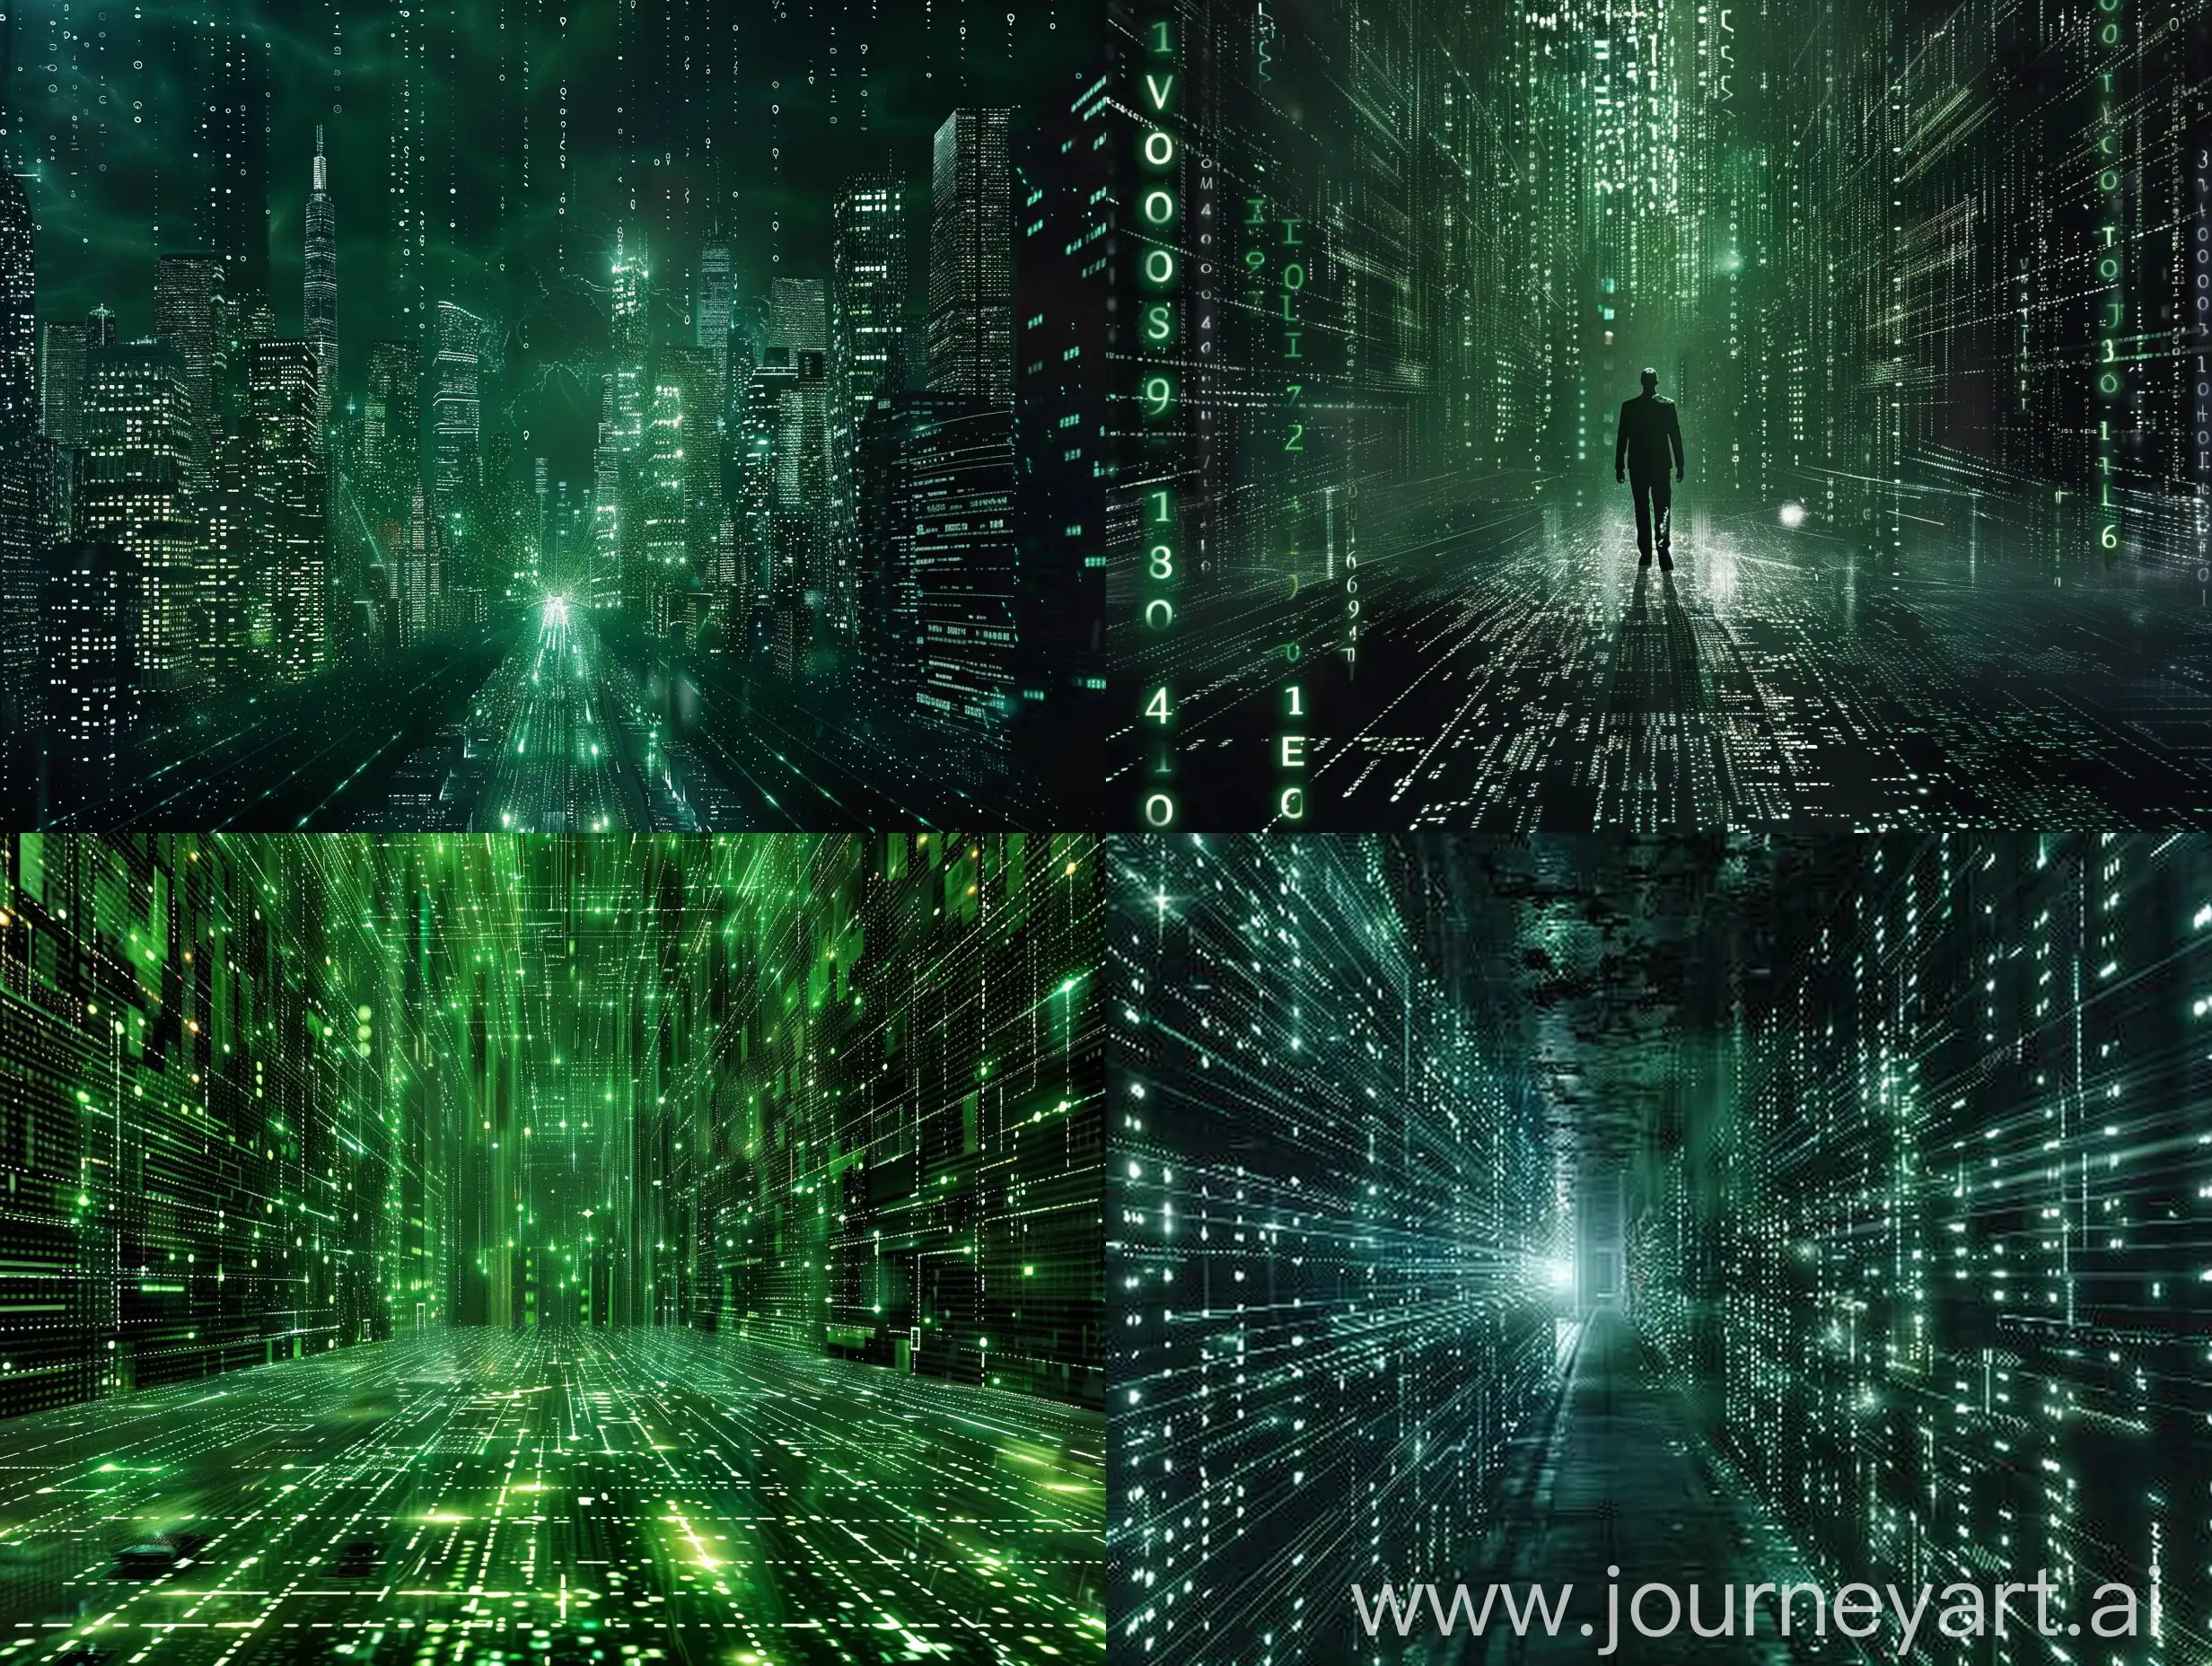 Futuristic-MatrixInspired-Digital-World-with-Version-6-Aesthetics